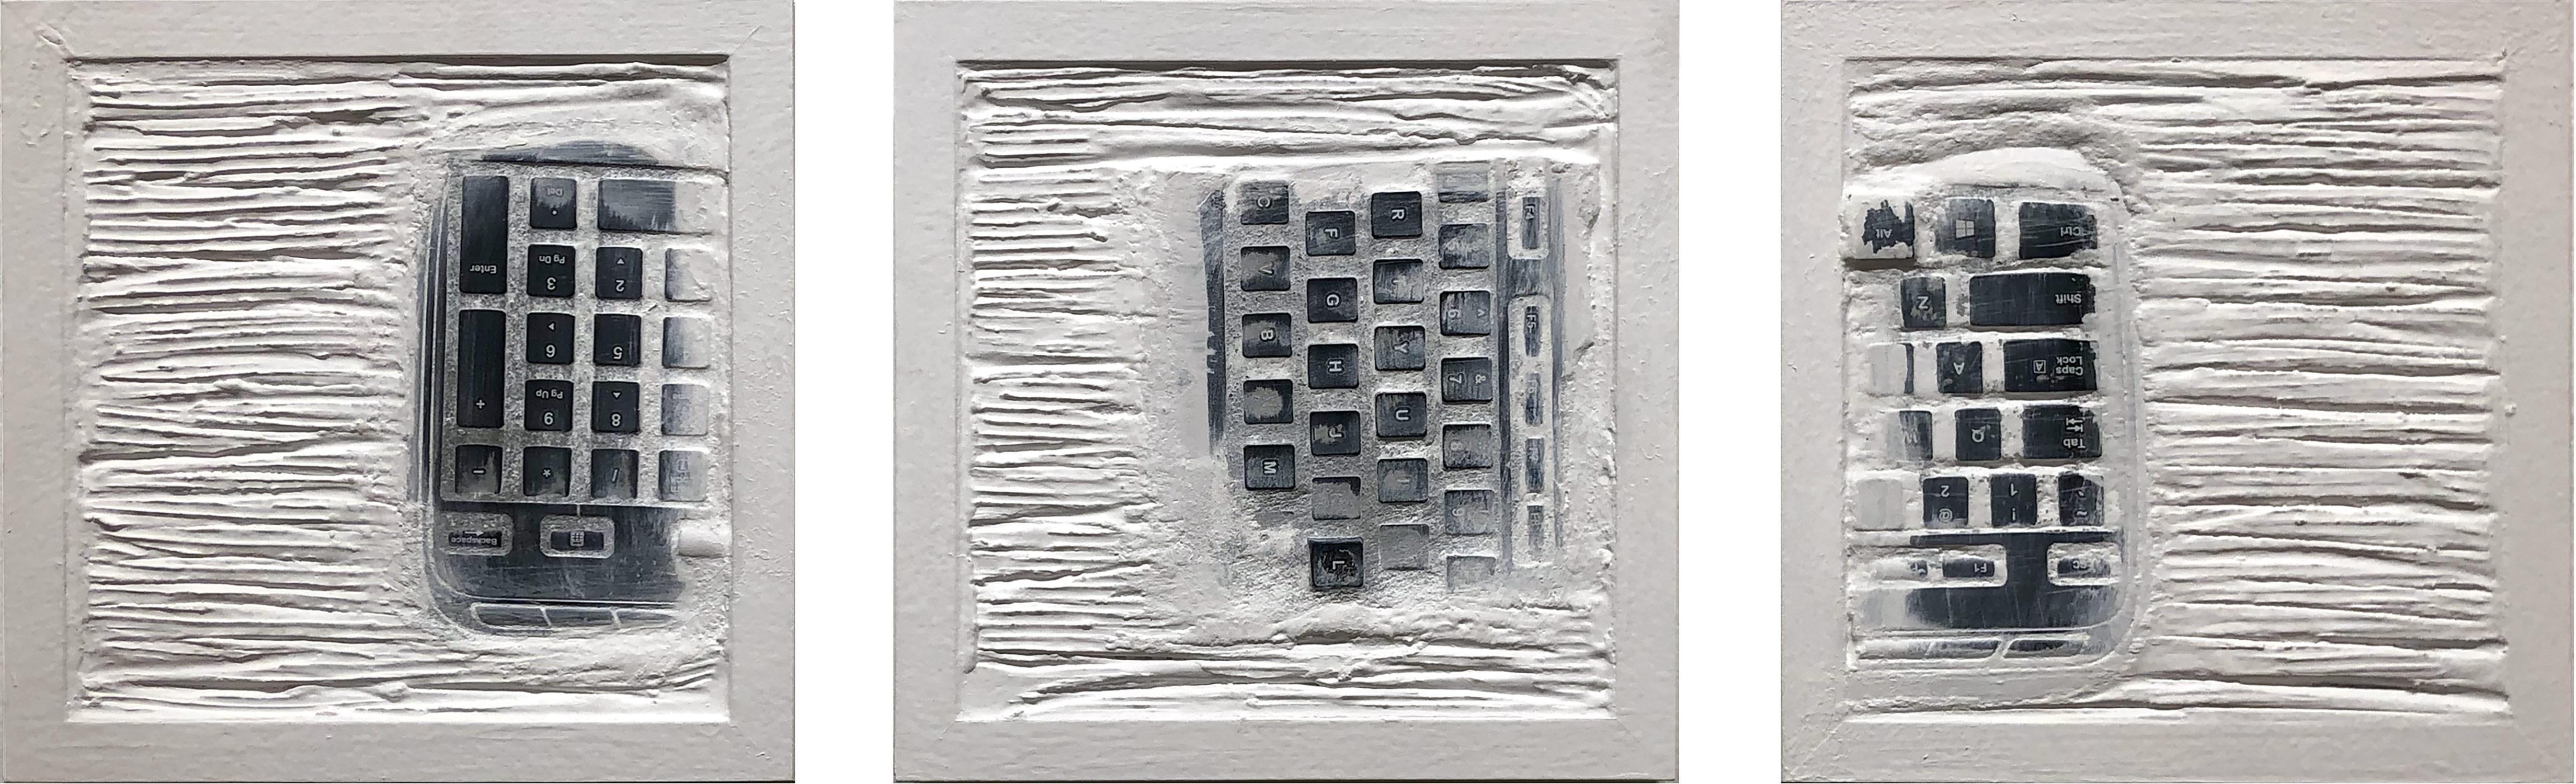 “Pen Decline 1 - 2 - 3 in White” (Archeology series) Computer Keyboard Sculpture